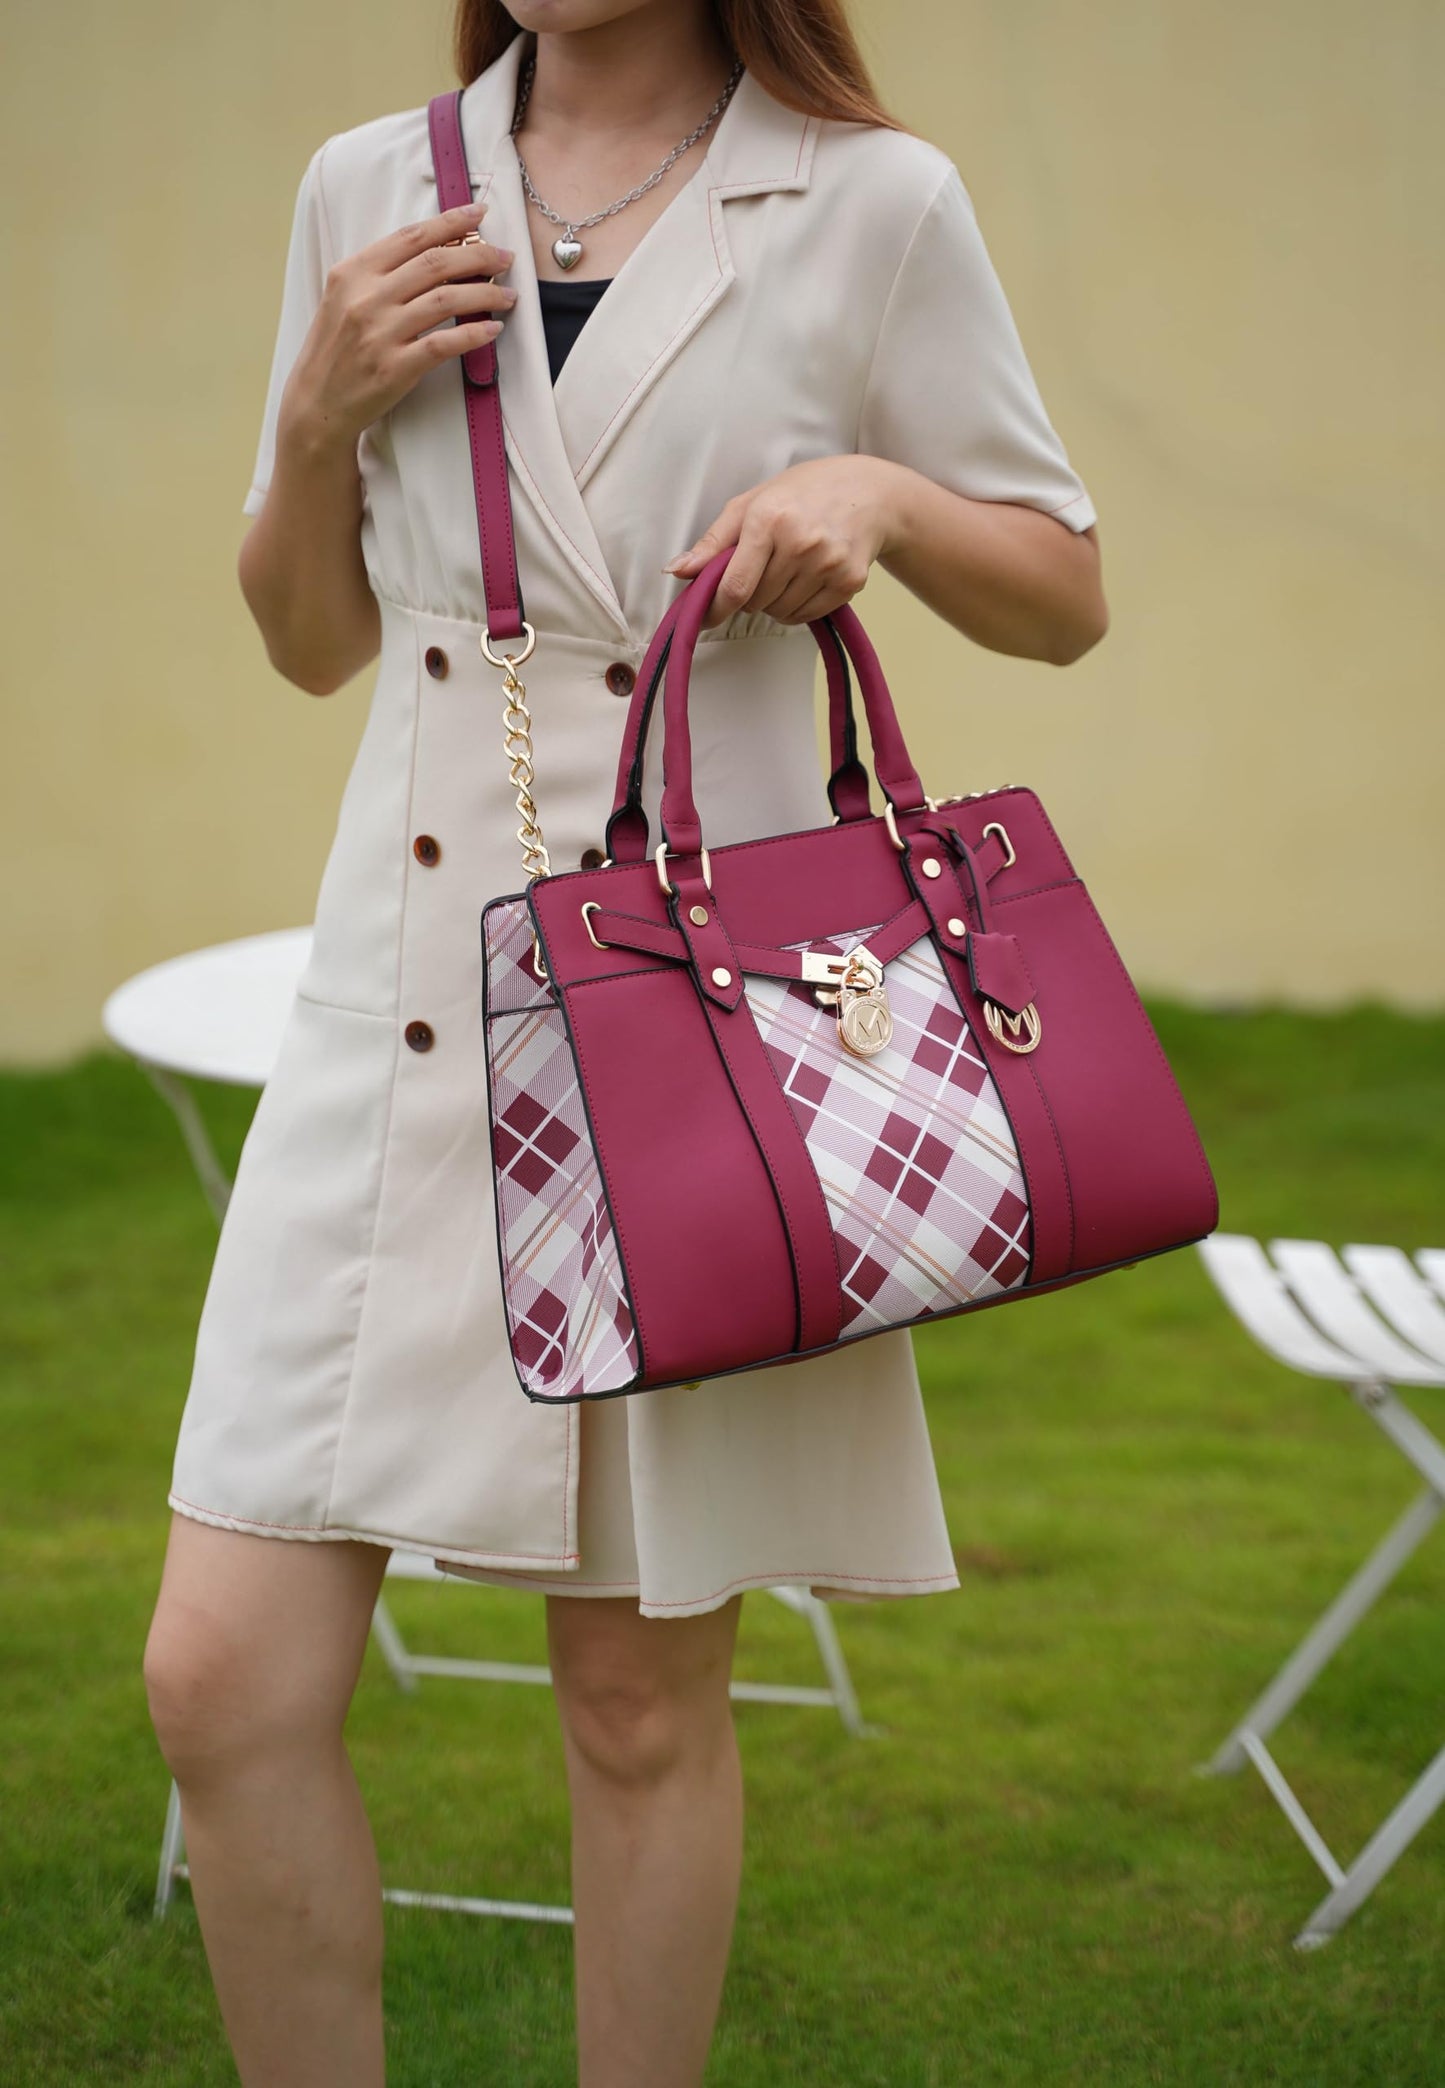 MKF Collection Satchel Bag & Wristlet Wallet Purse Set for Women, Top-Handle Crossbody Shoulder Handbag Purse